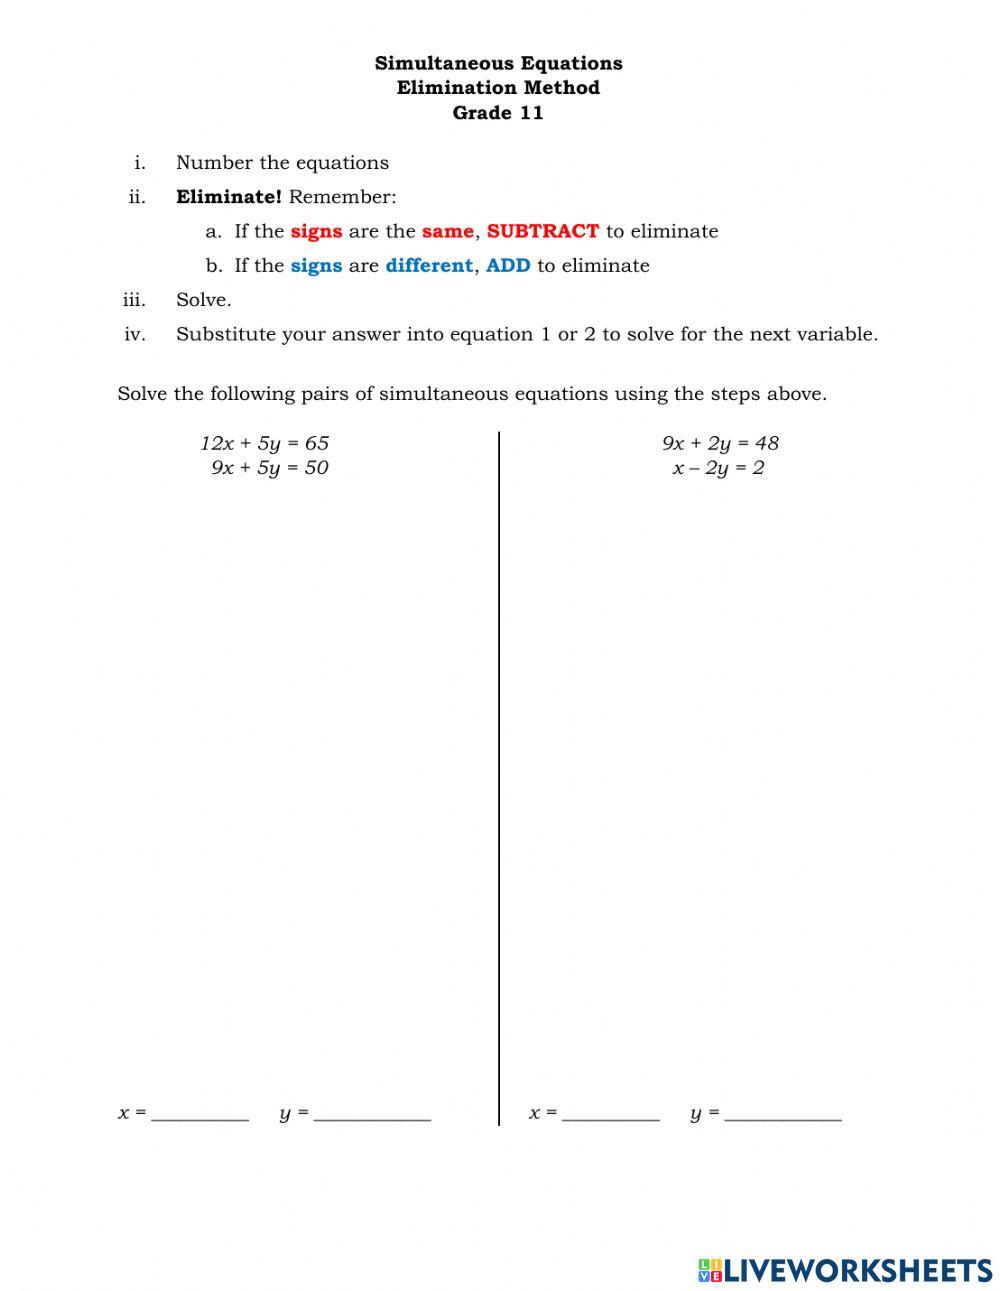 Simultaneous Equations - Elimination